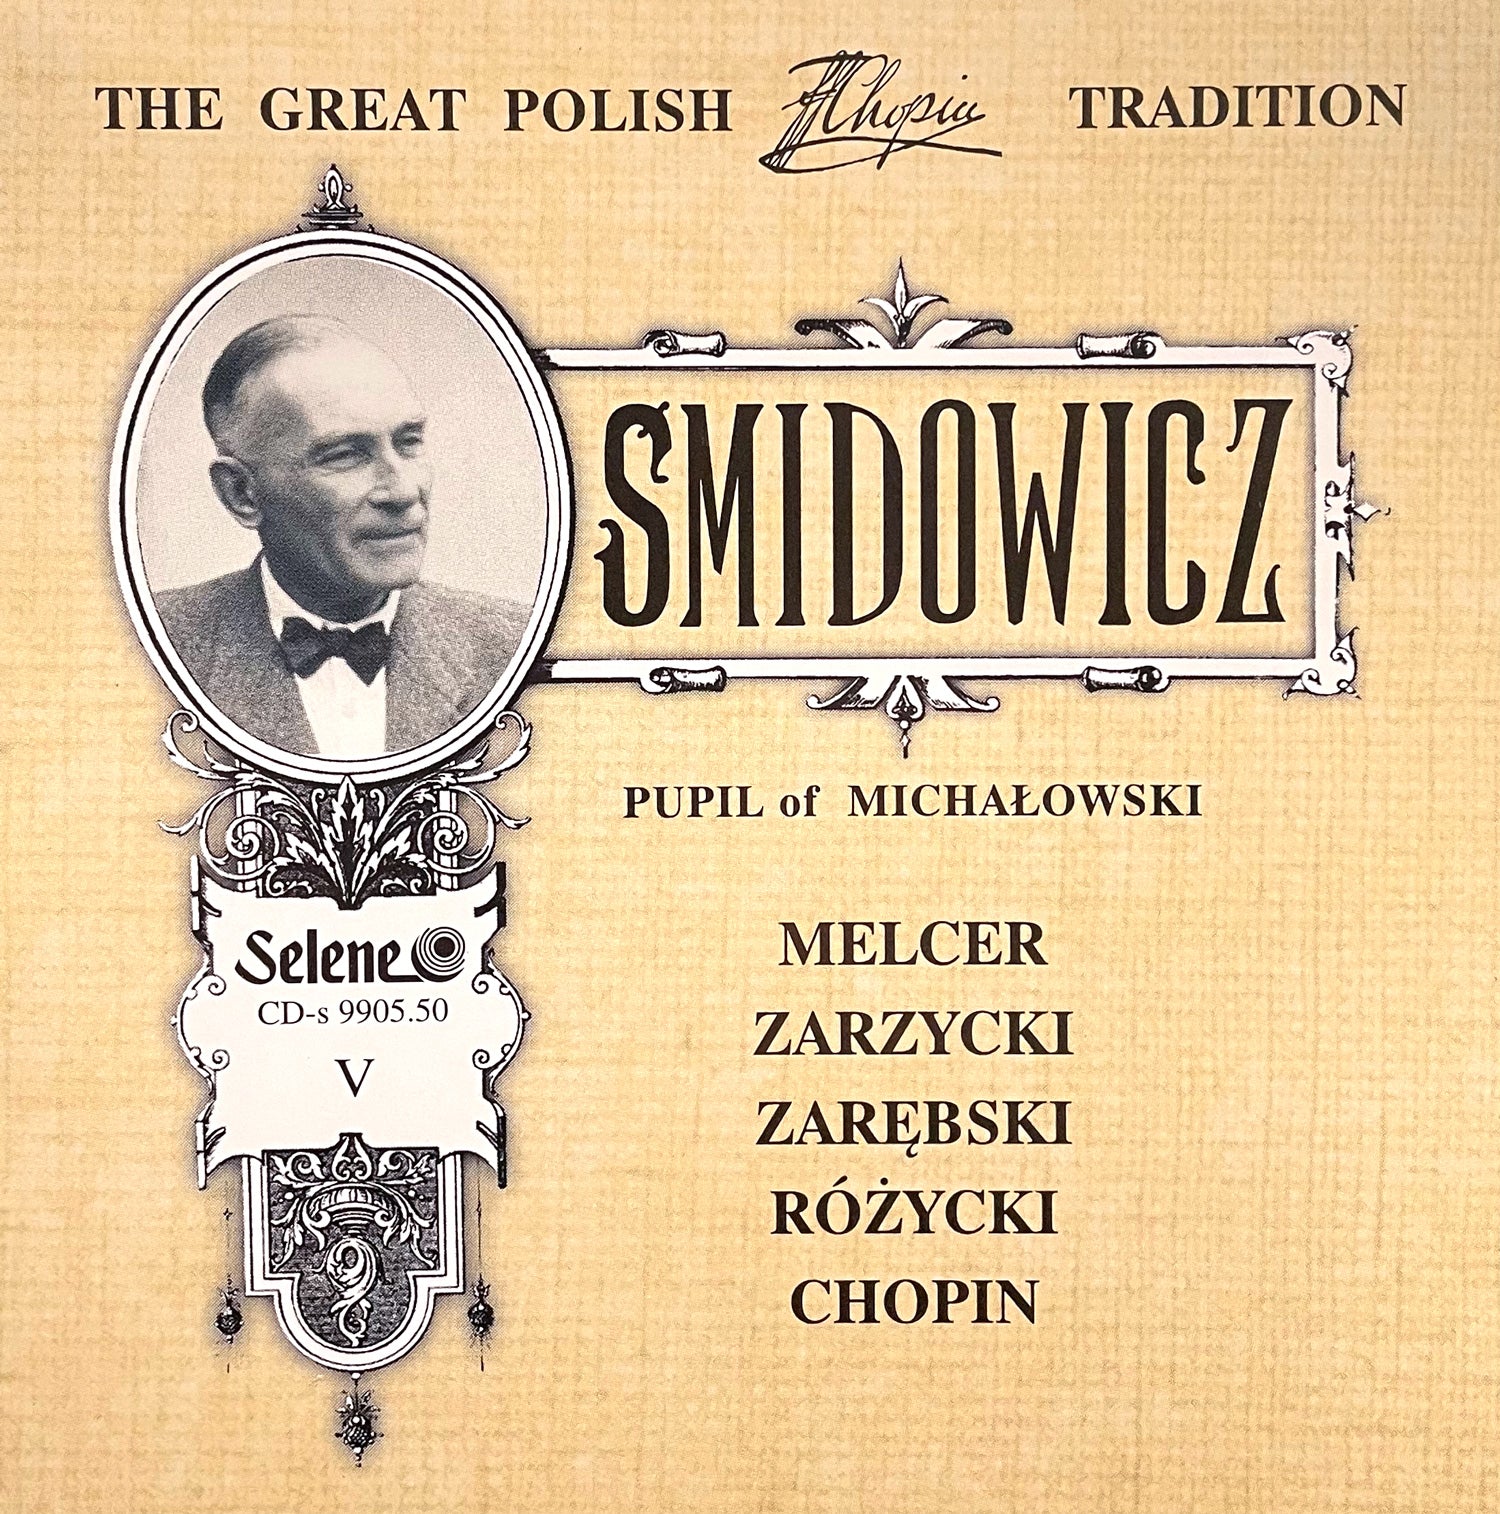 The Great Polish Chopin Tradition - Smidowicz Vol. 5